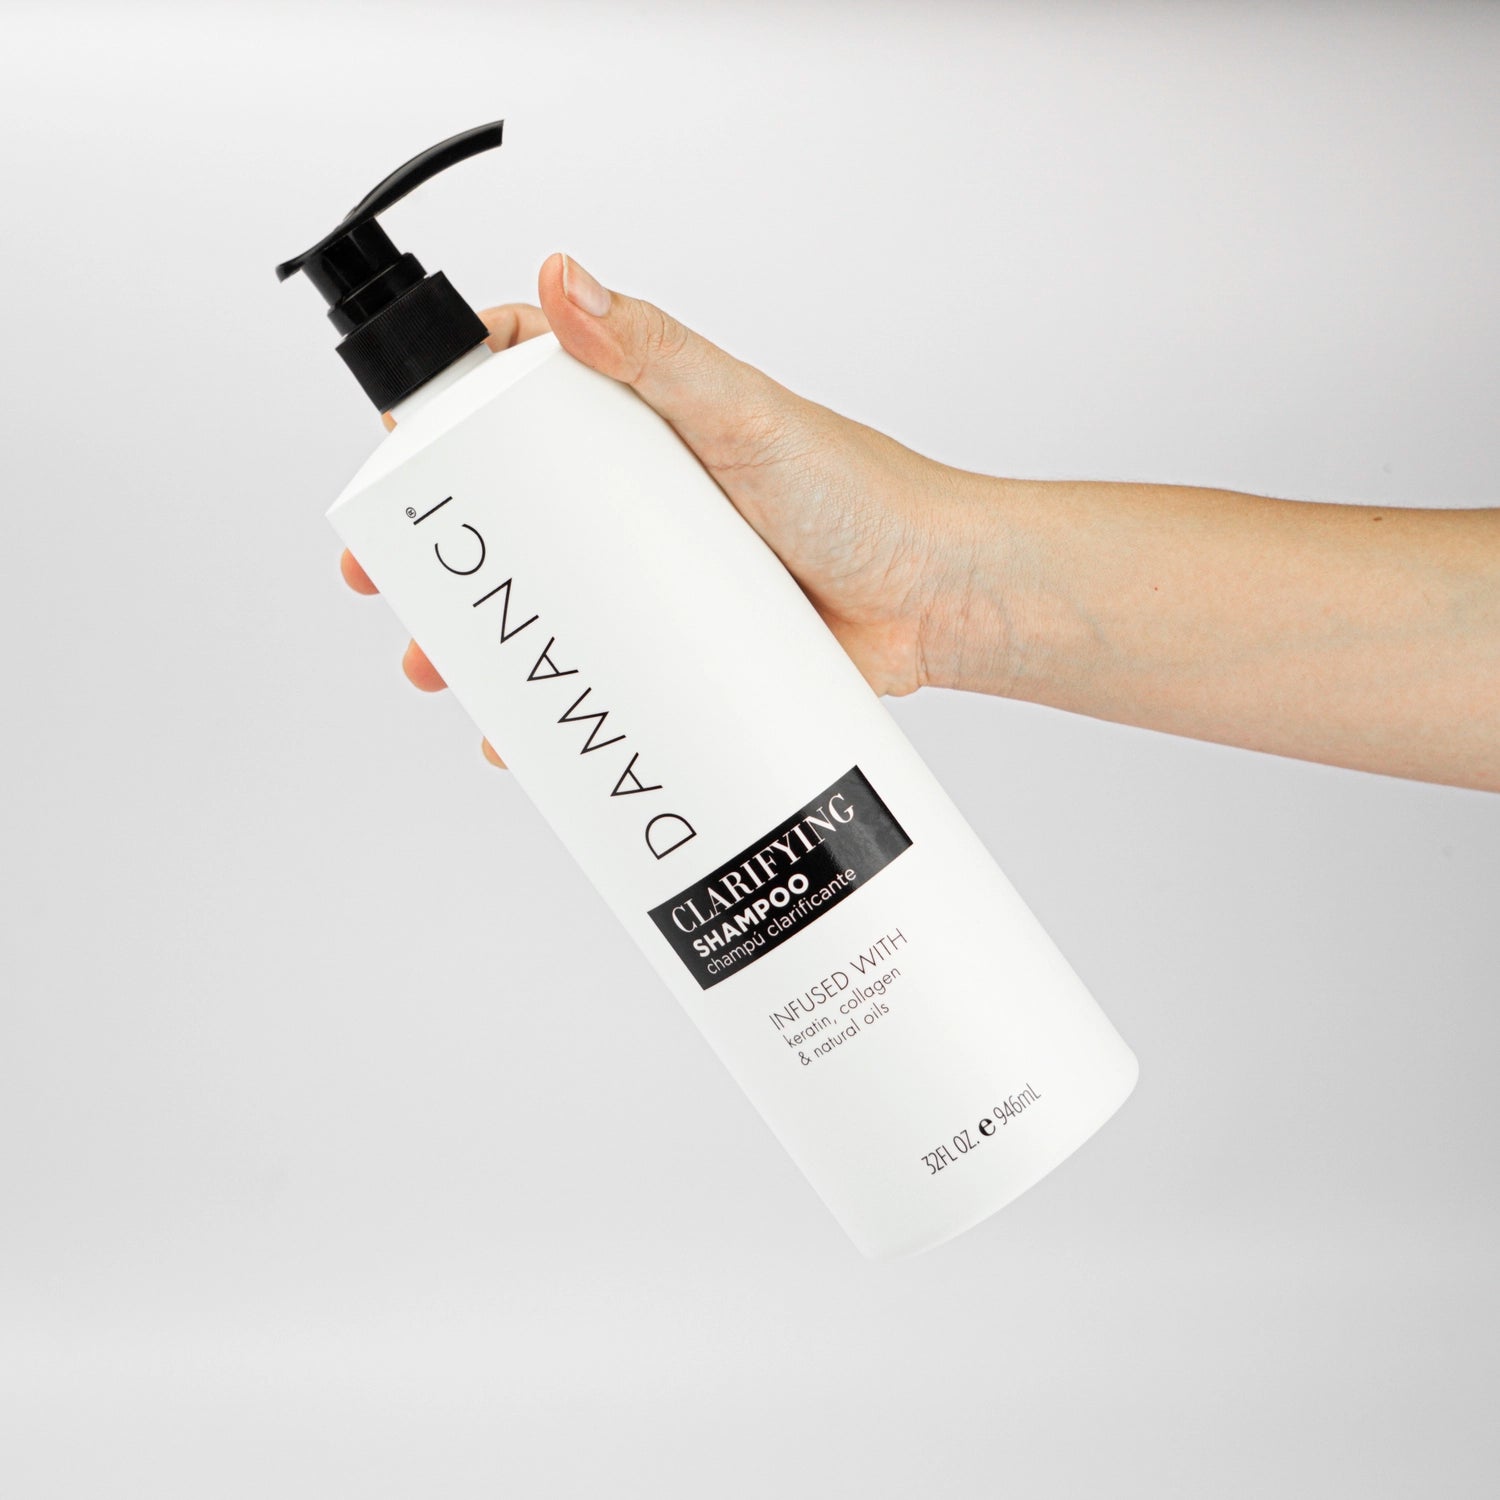 DAMANCI Clarifying Shampoo for Deep Cleansing & Repair 32oz